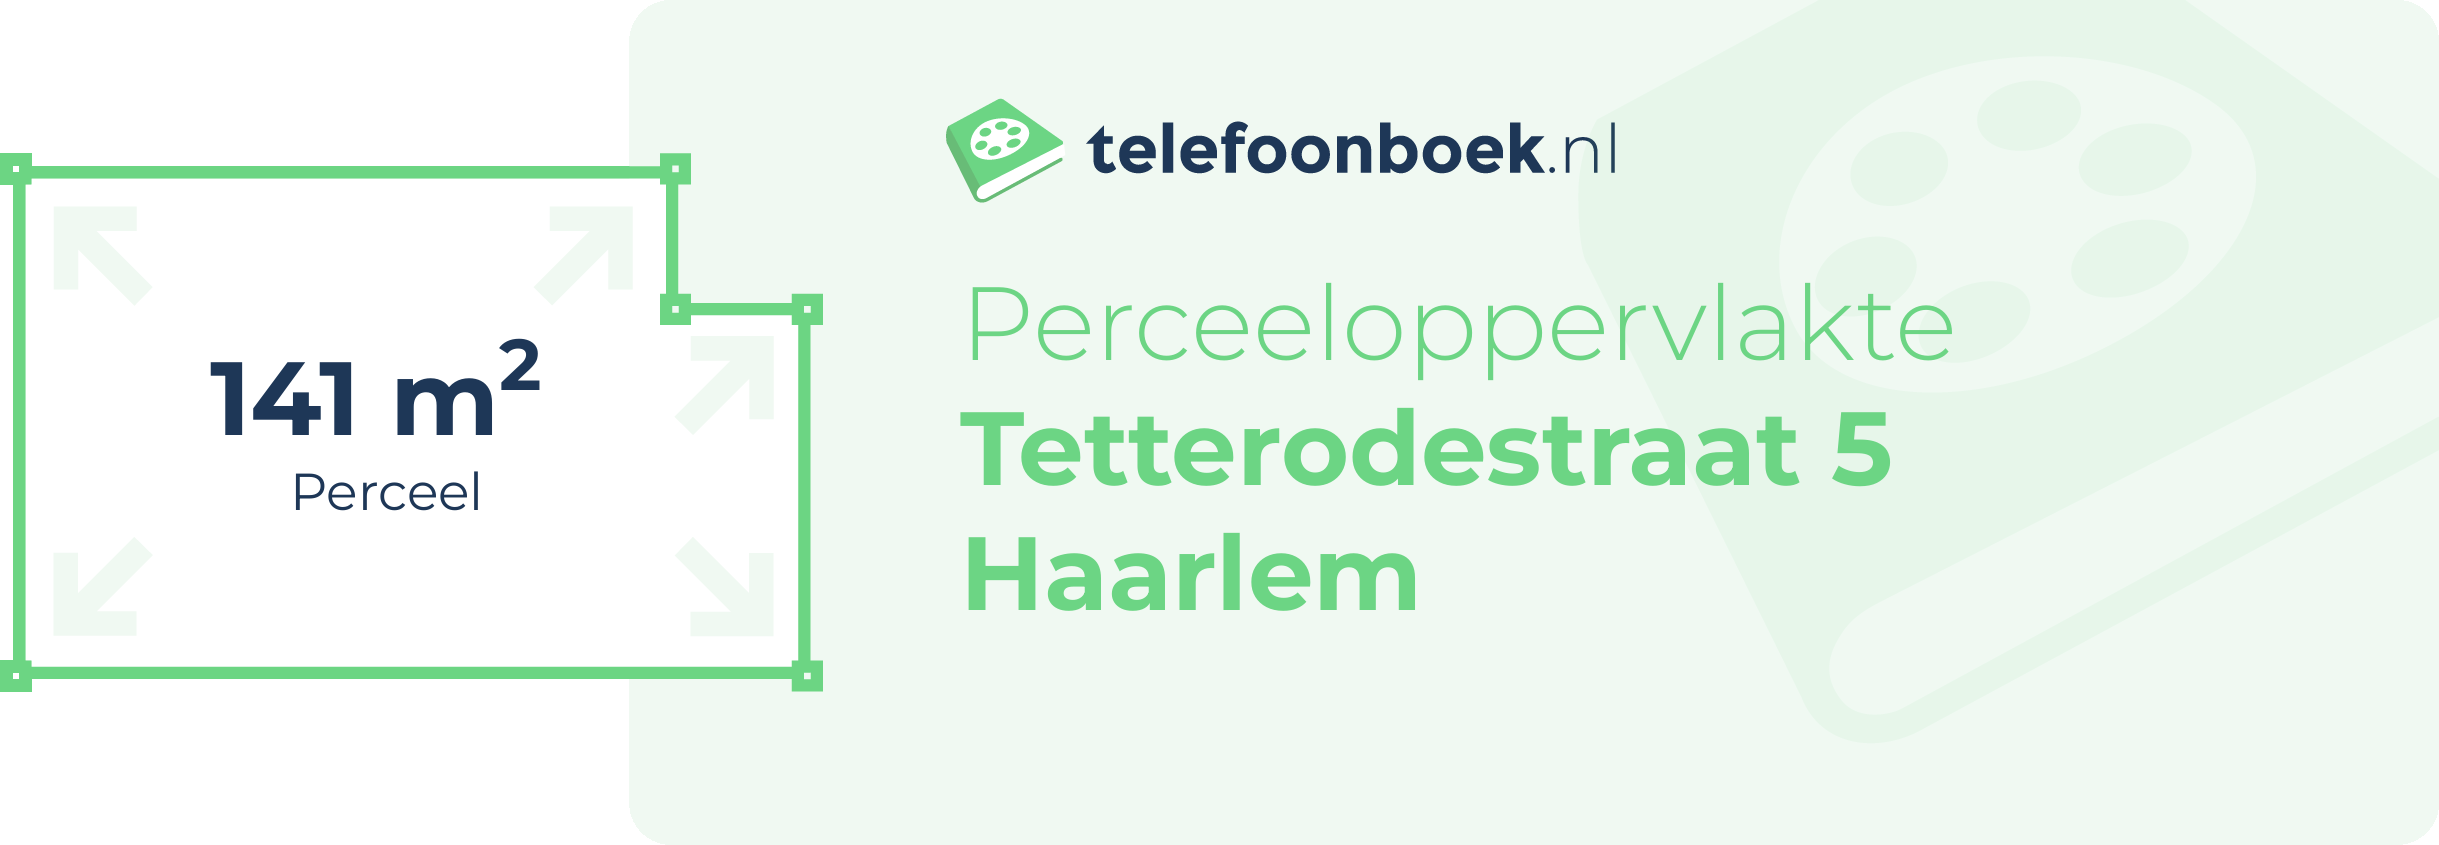 Perceeloppervlakte Tetterodestraat 5 Haarlem